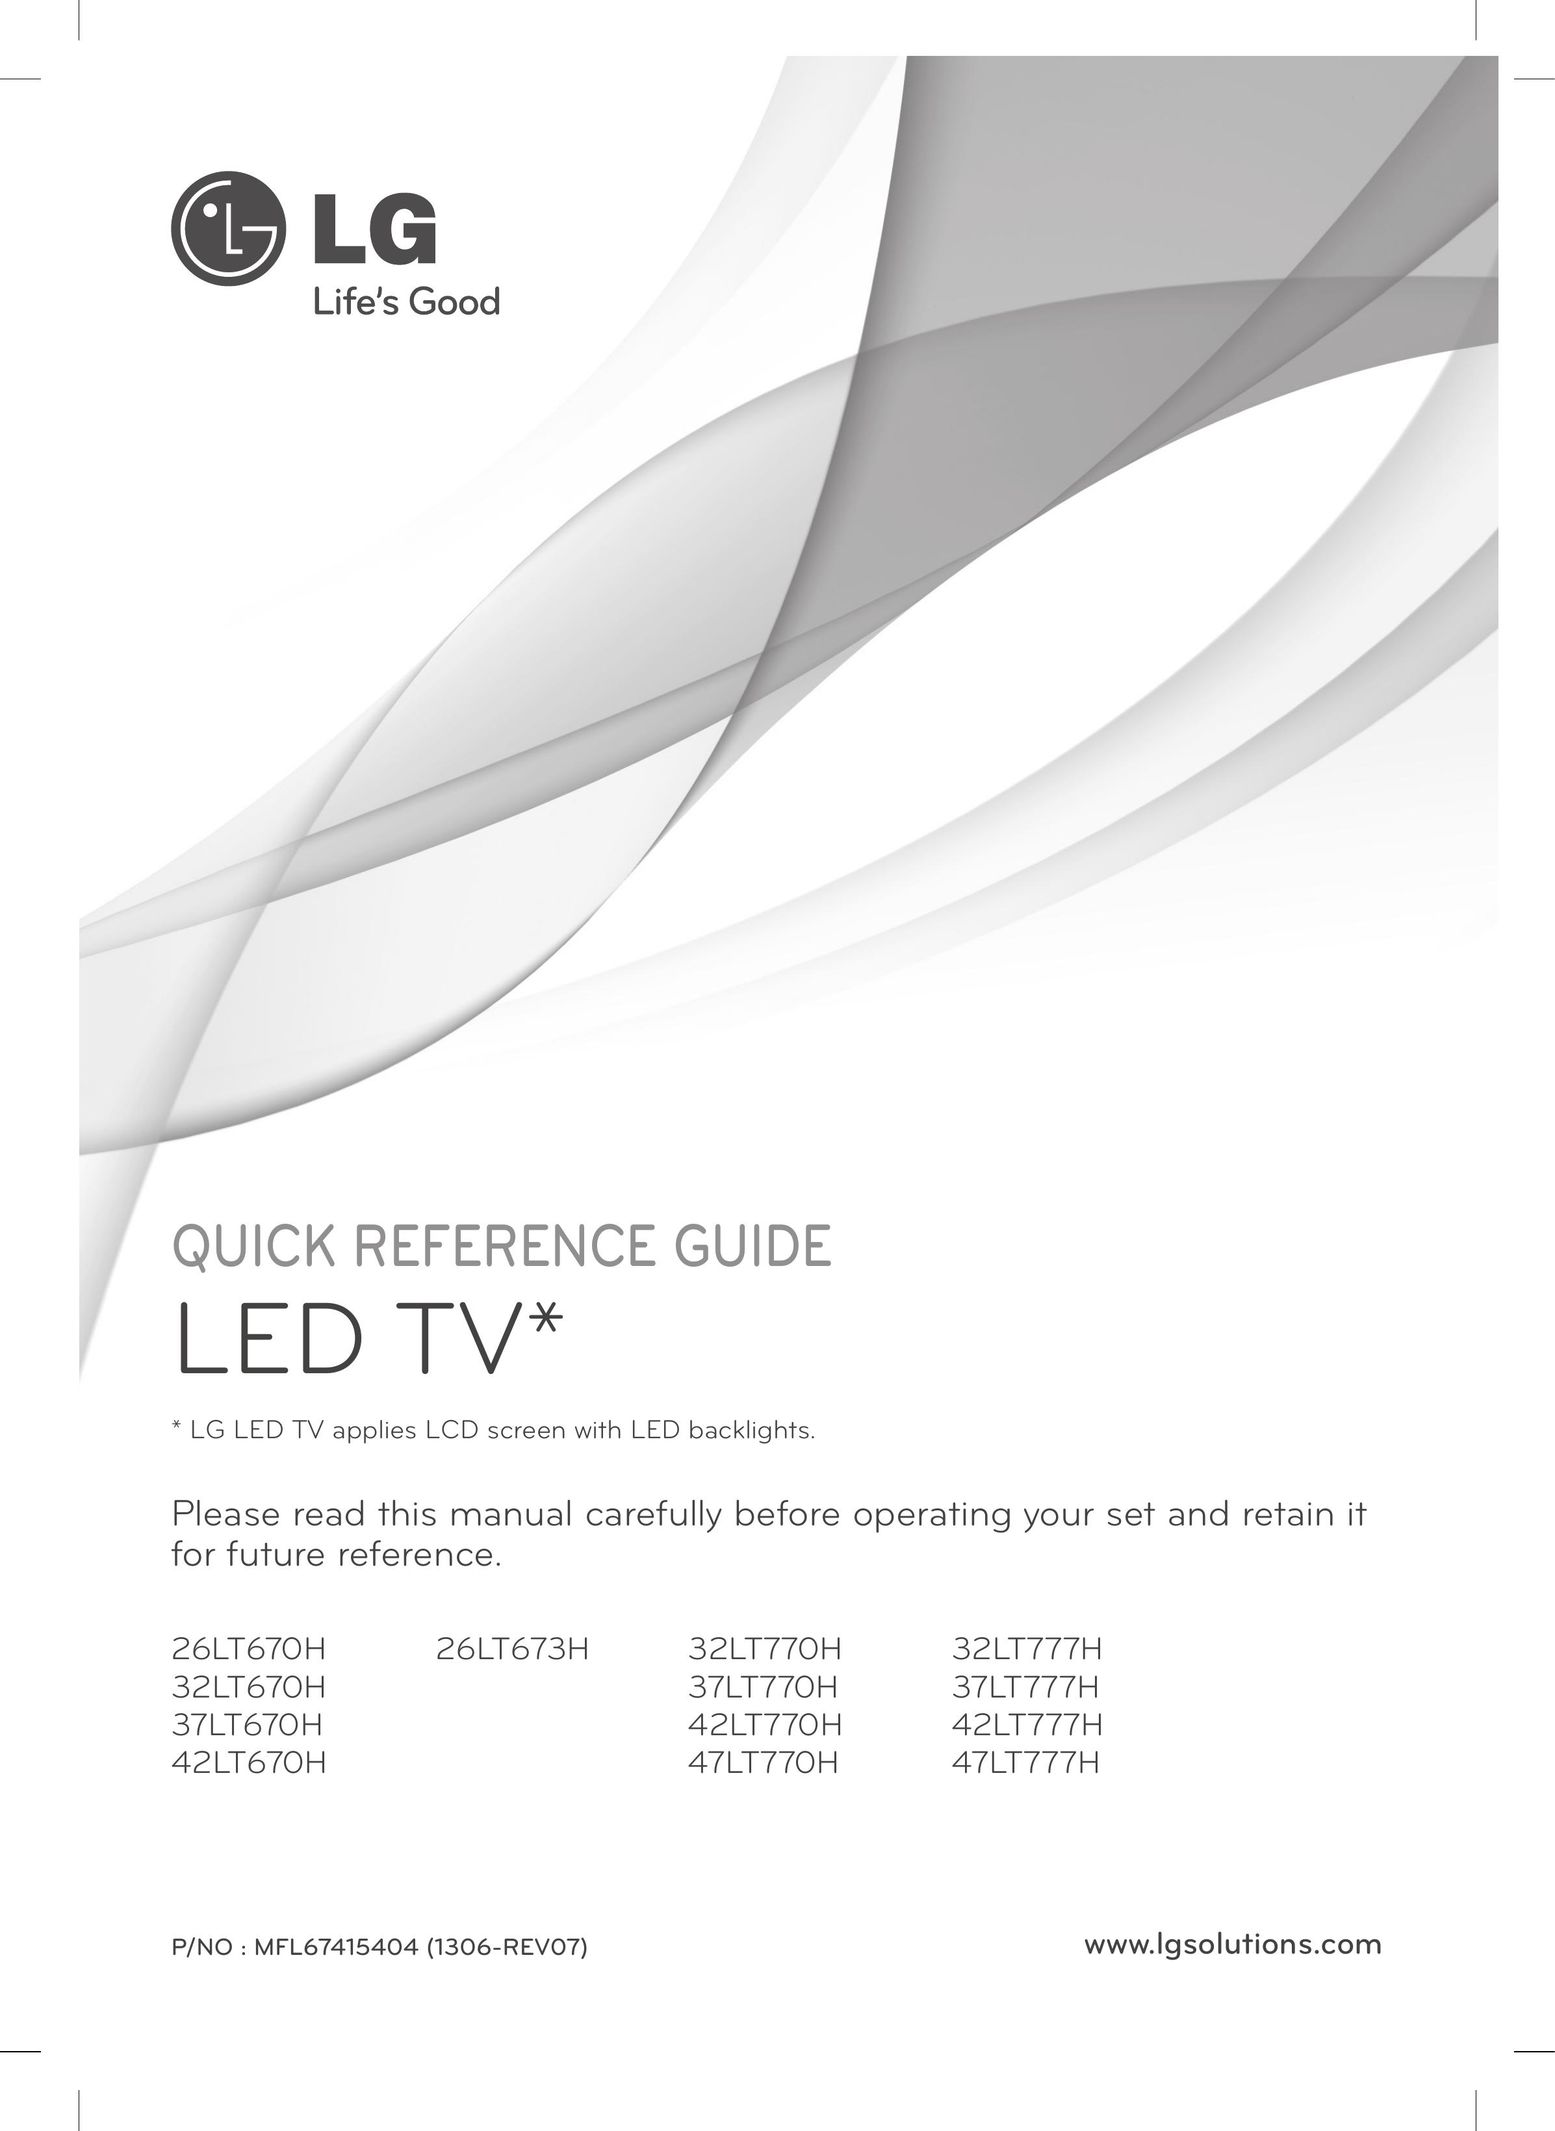 LG Electronics 37LT670H Car Satellite TV System User Manual